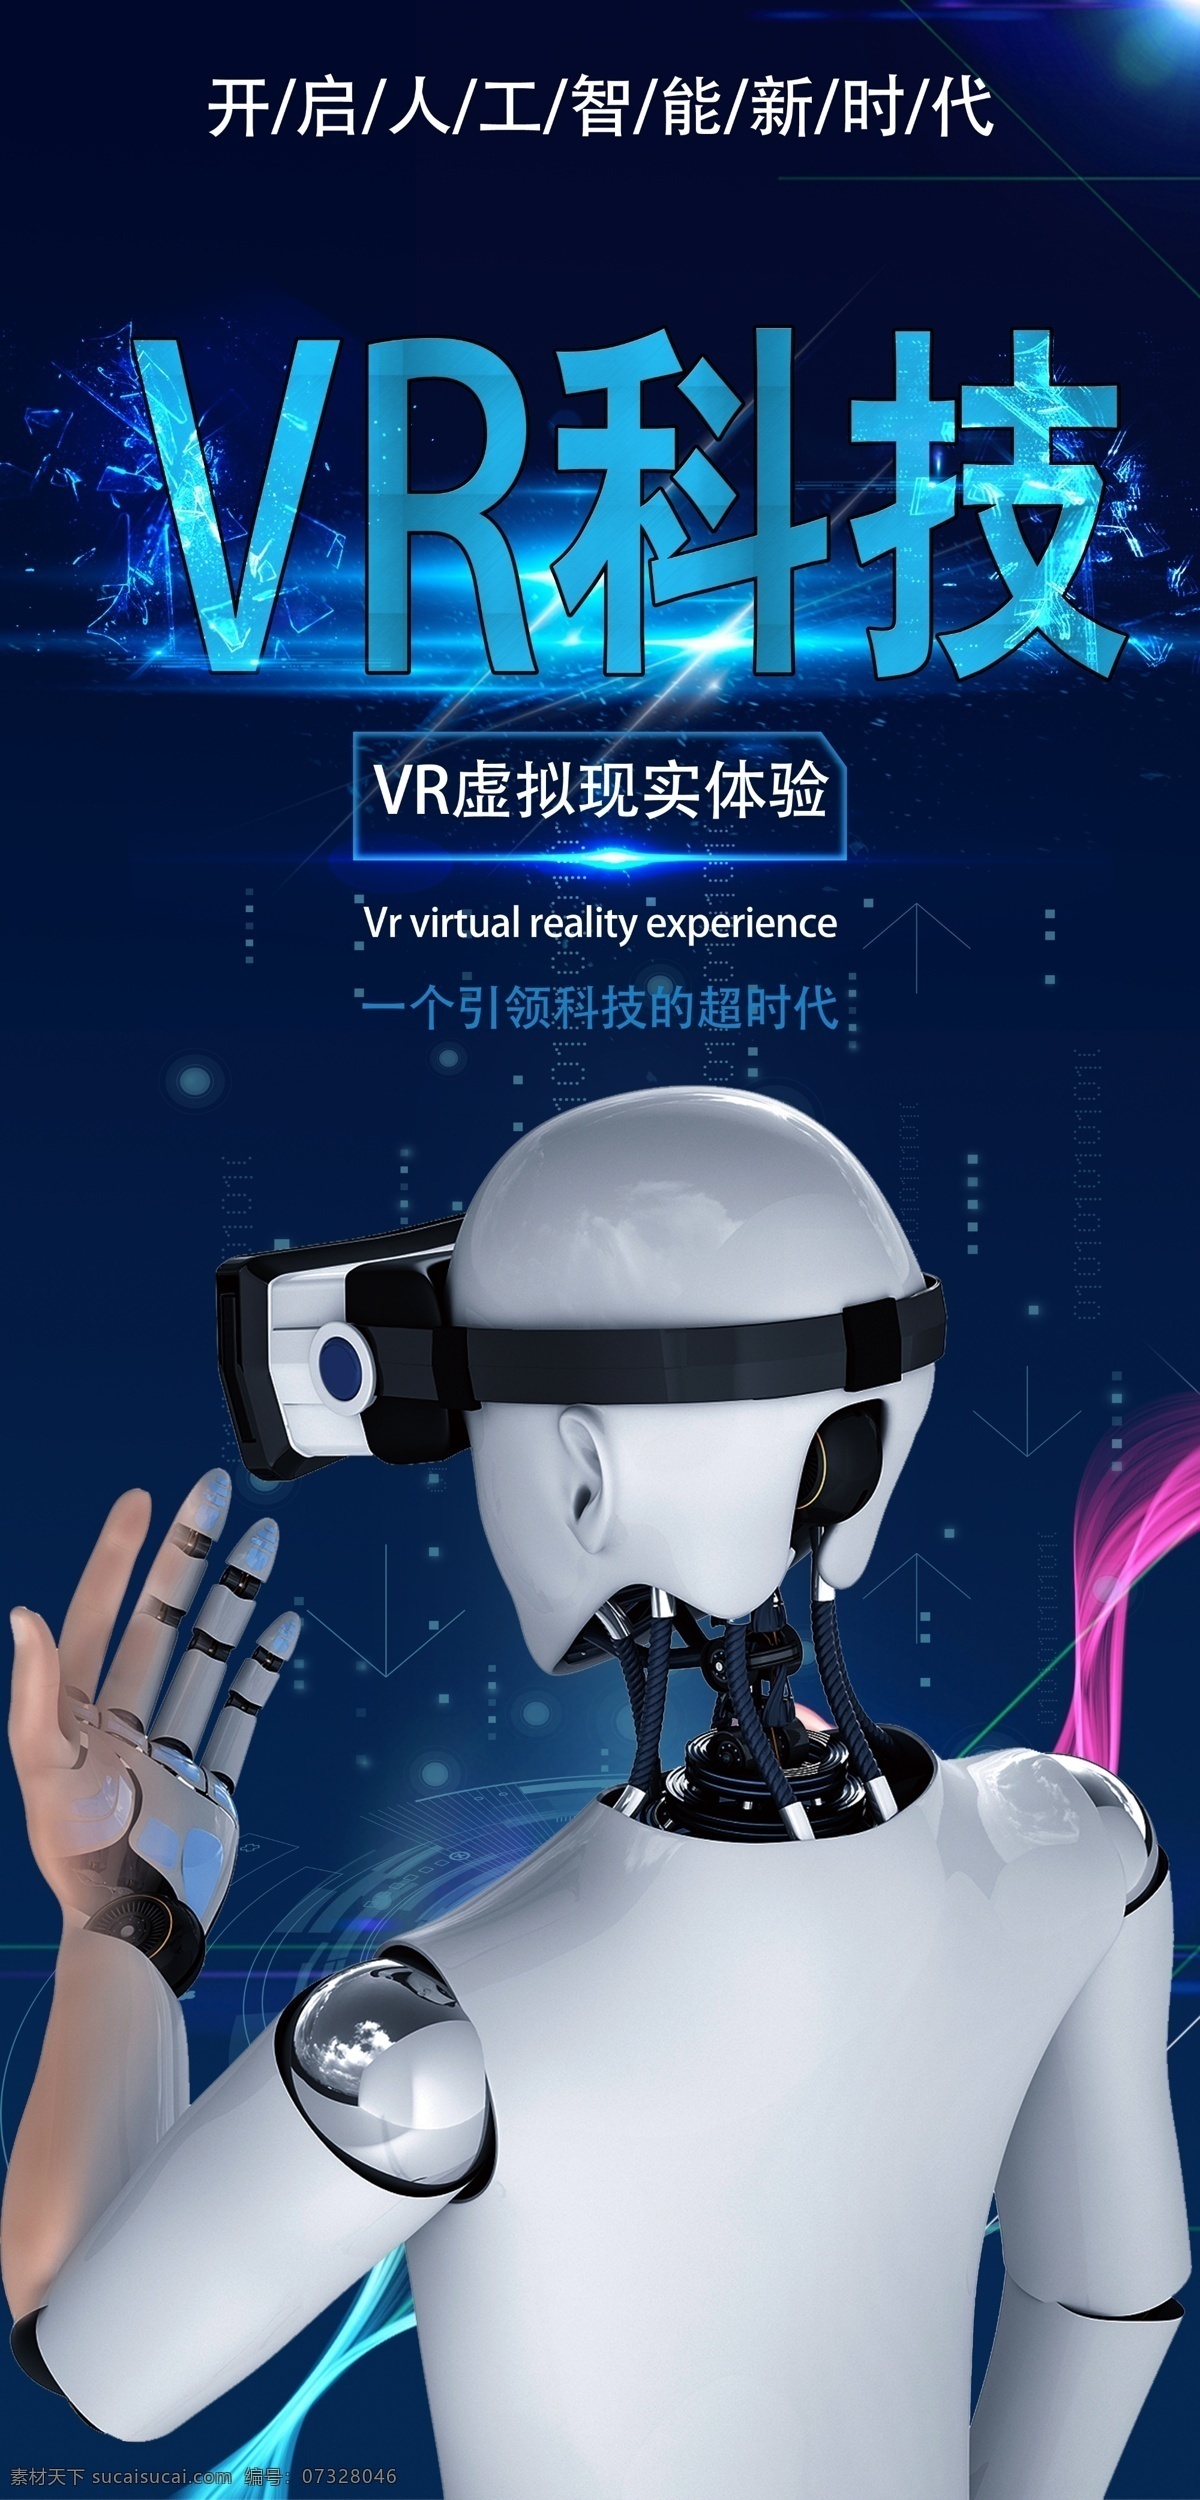 vr科技 人工智能 高科技 机器人 背景 平面 现代科技 数码产品